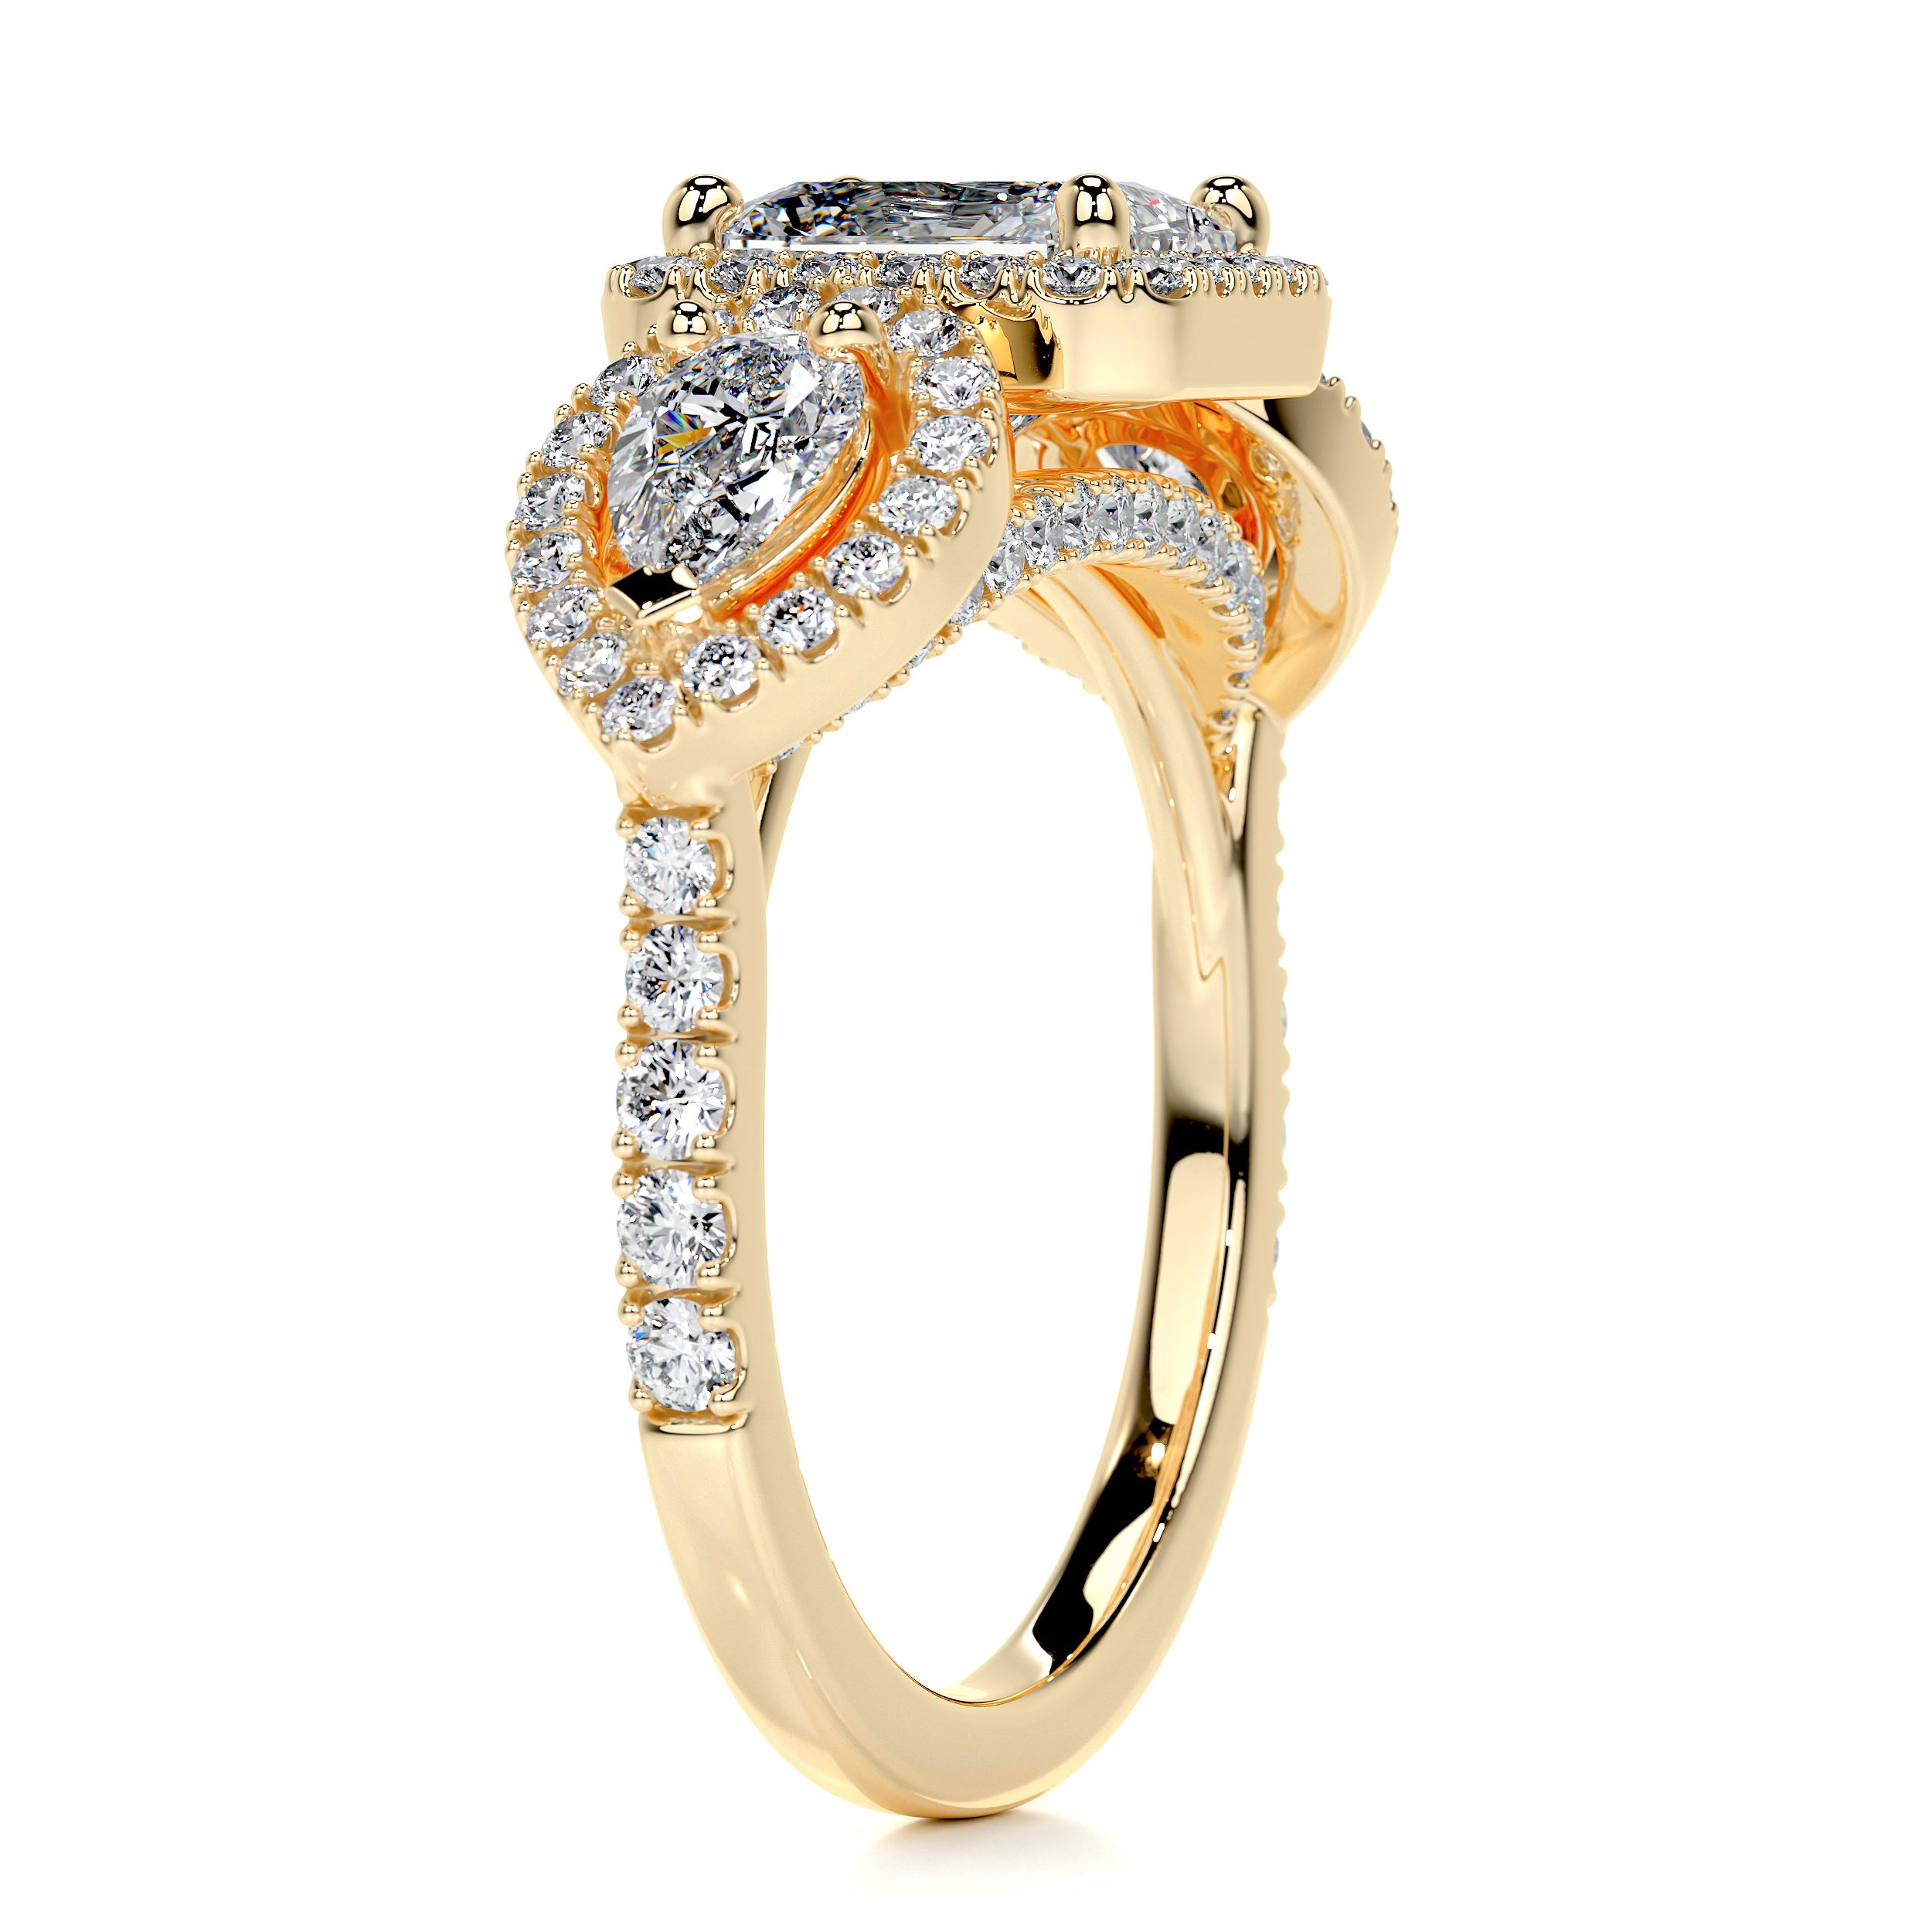 Violet Diamond Engagement Ring   (2.15 Carat) - 18K Yellow Gold